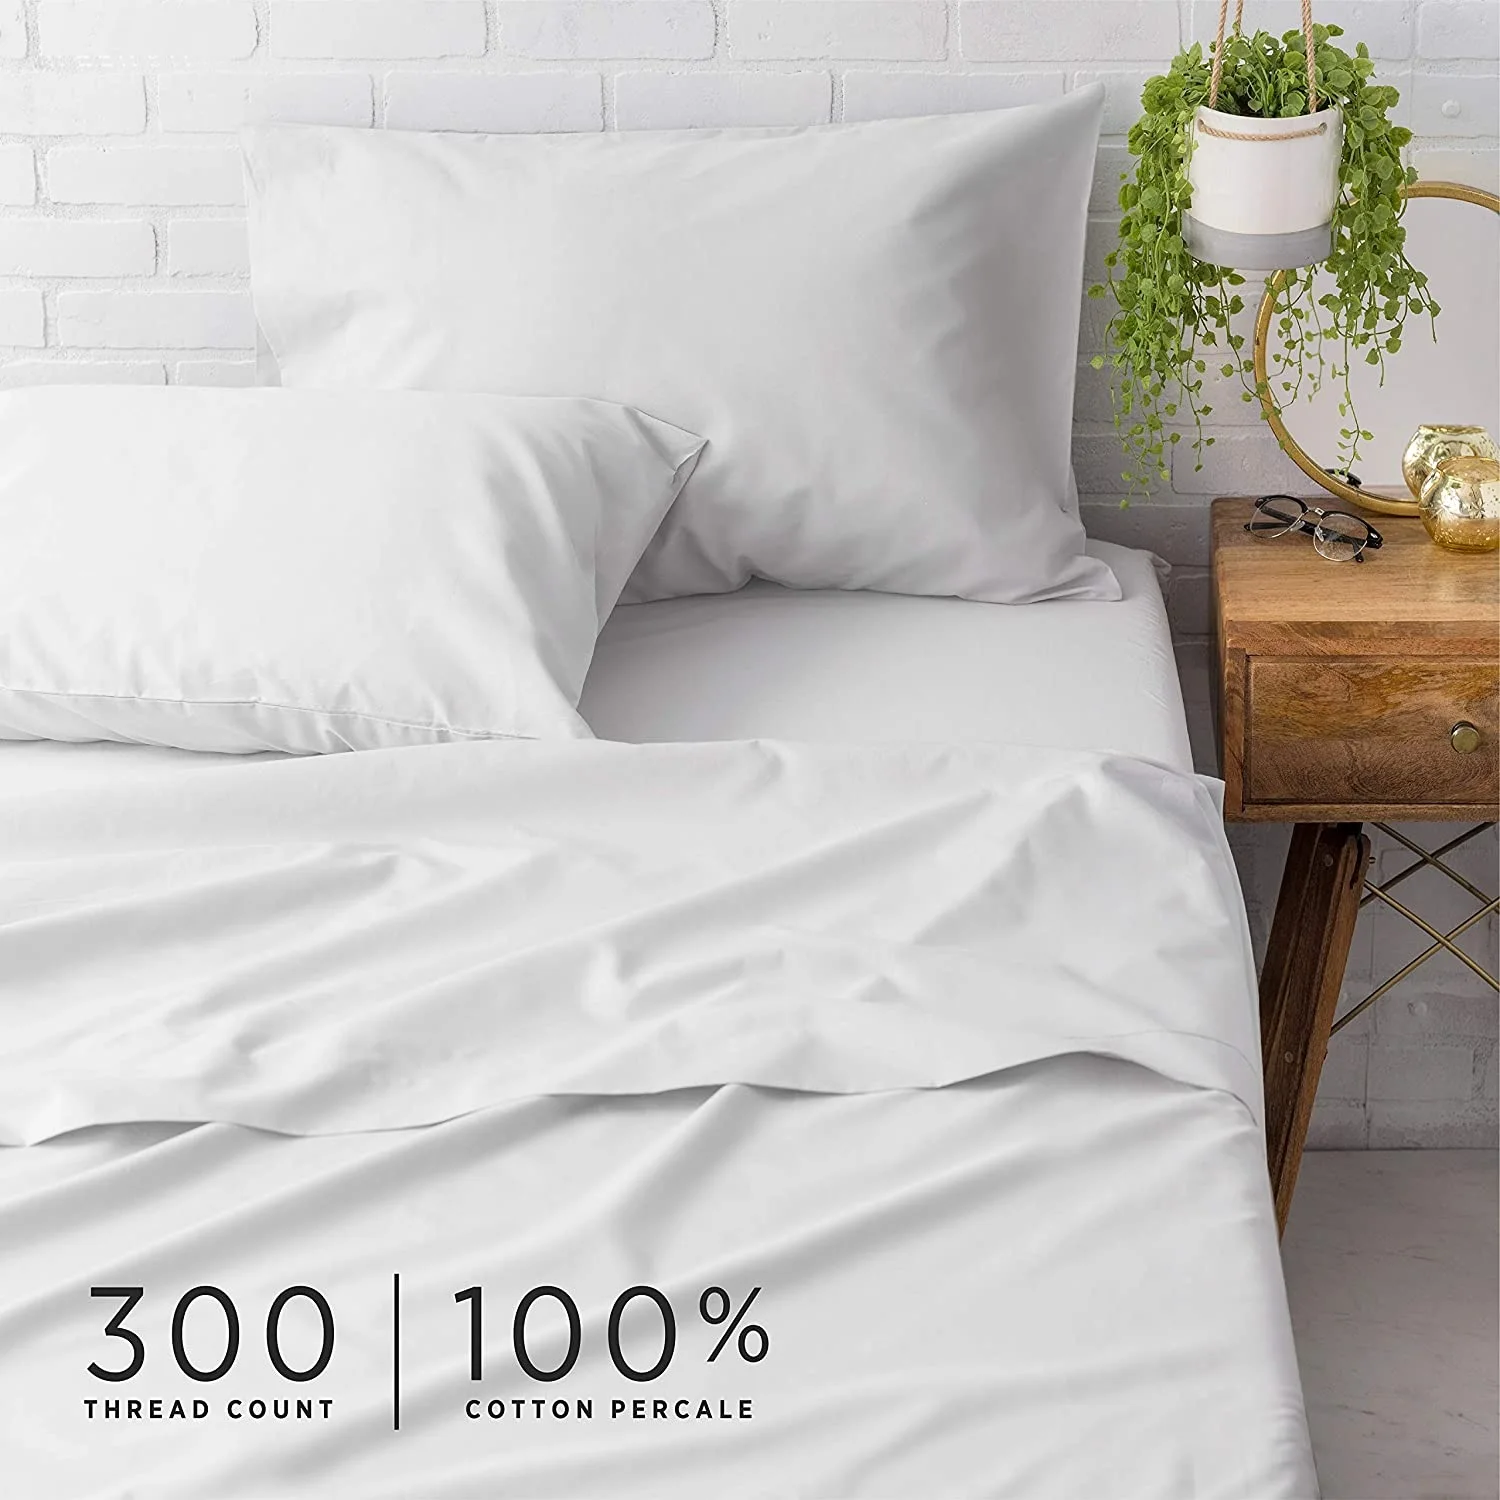 TC300 Egyptian Cotton Sateen FLAT BED SHEET 100% Egyptian Cotton PREMIUM QUALITY 